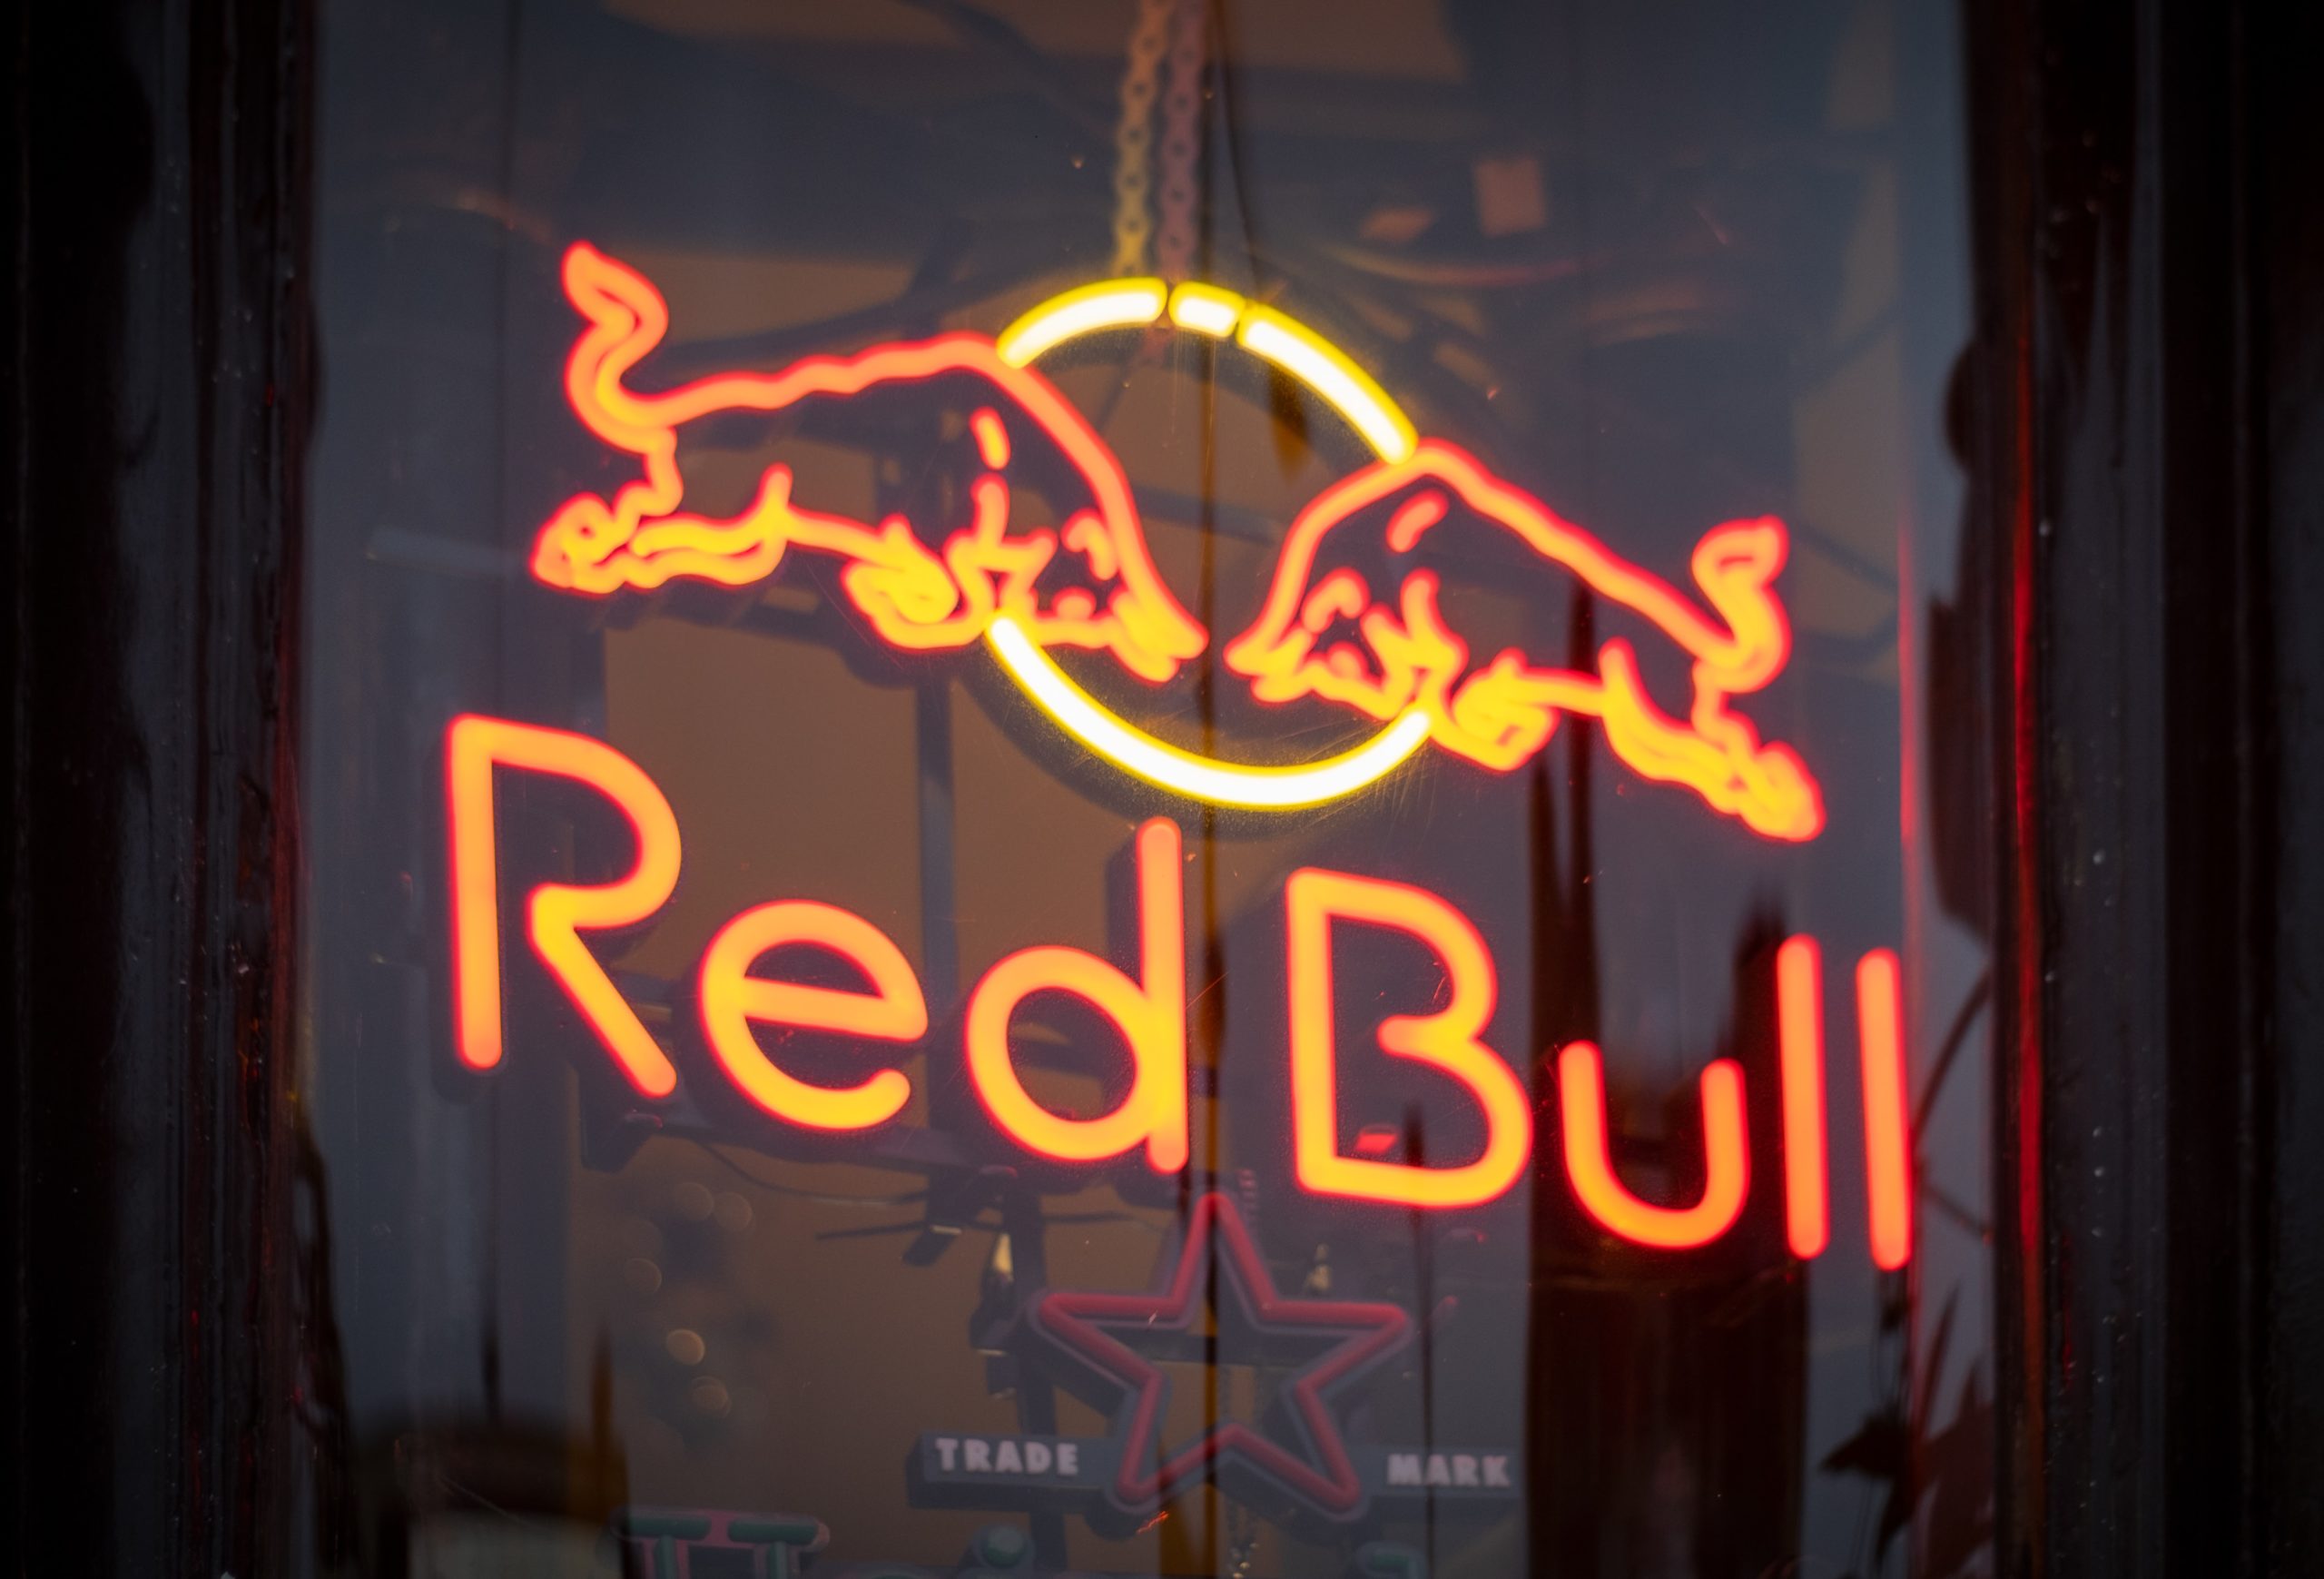 Sydney red bull event